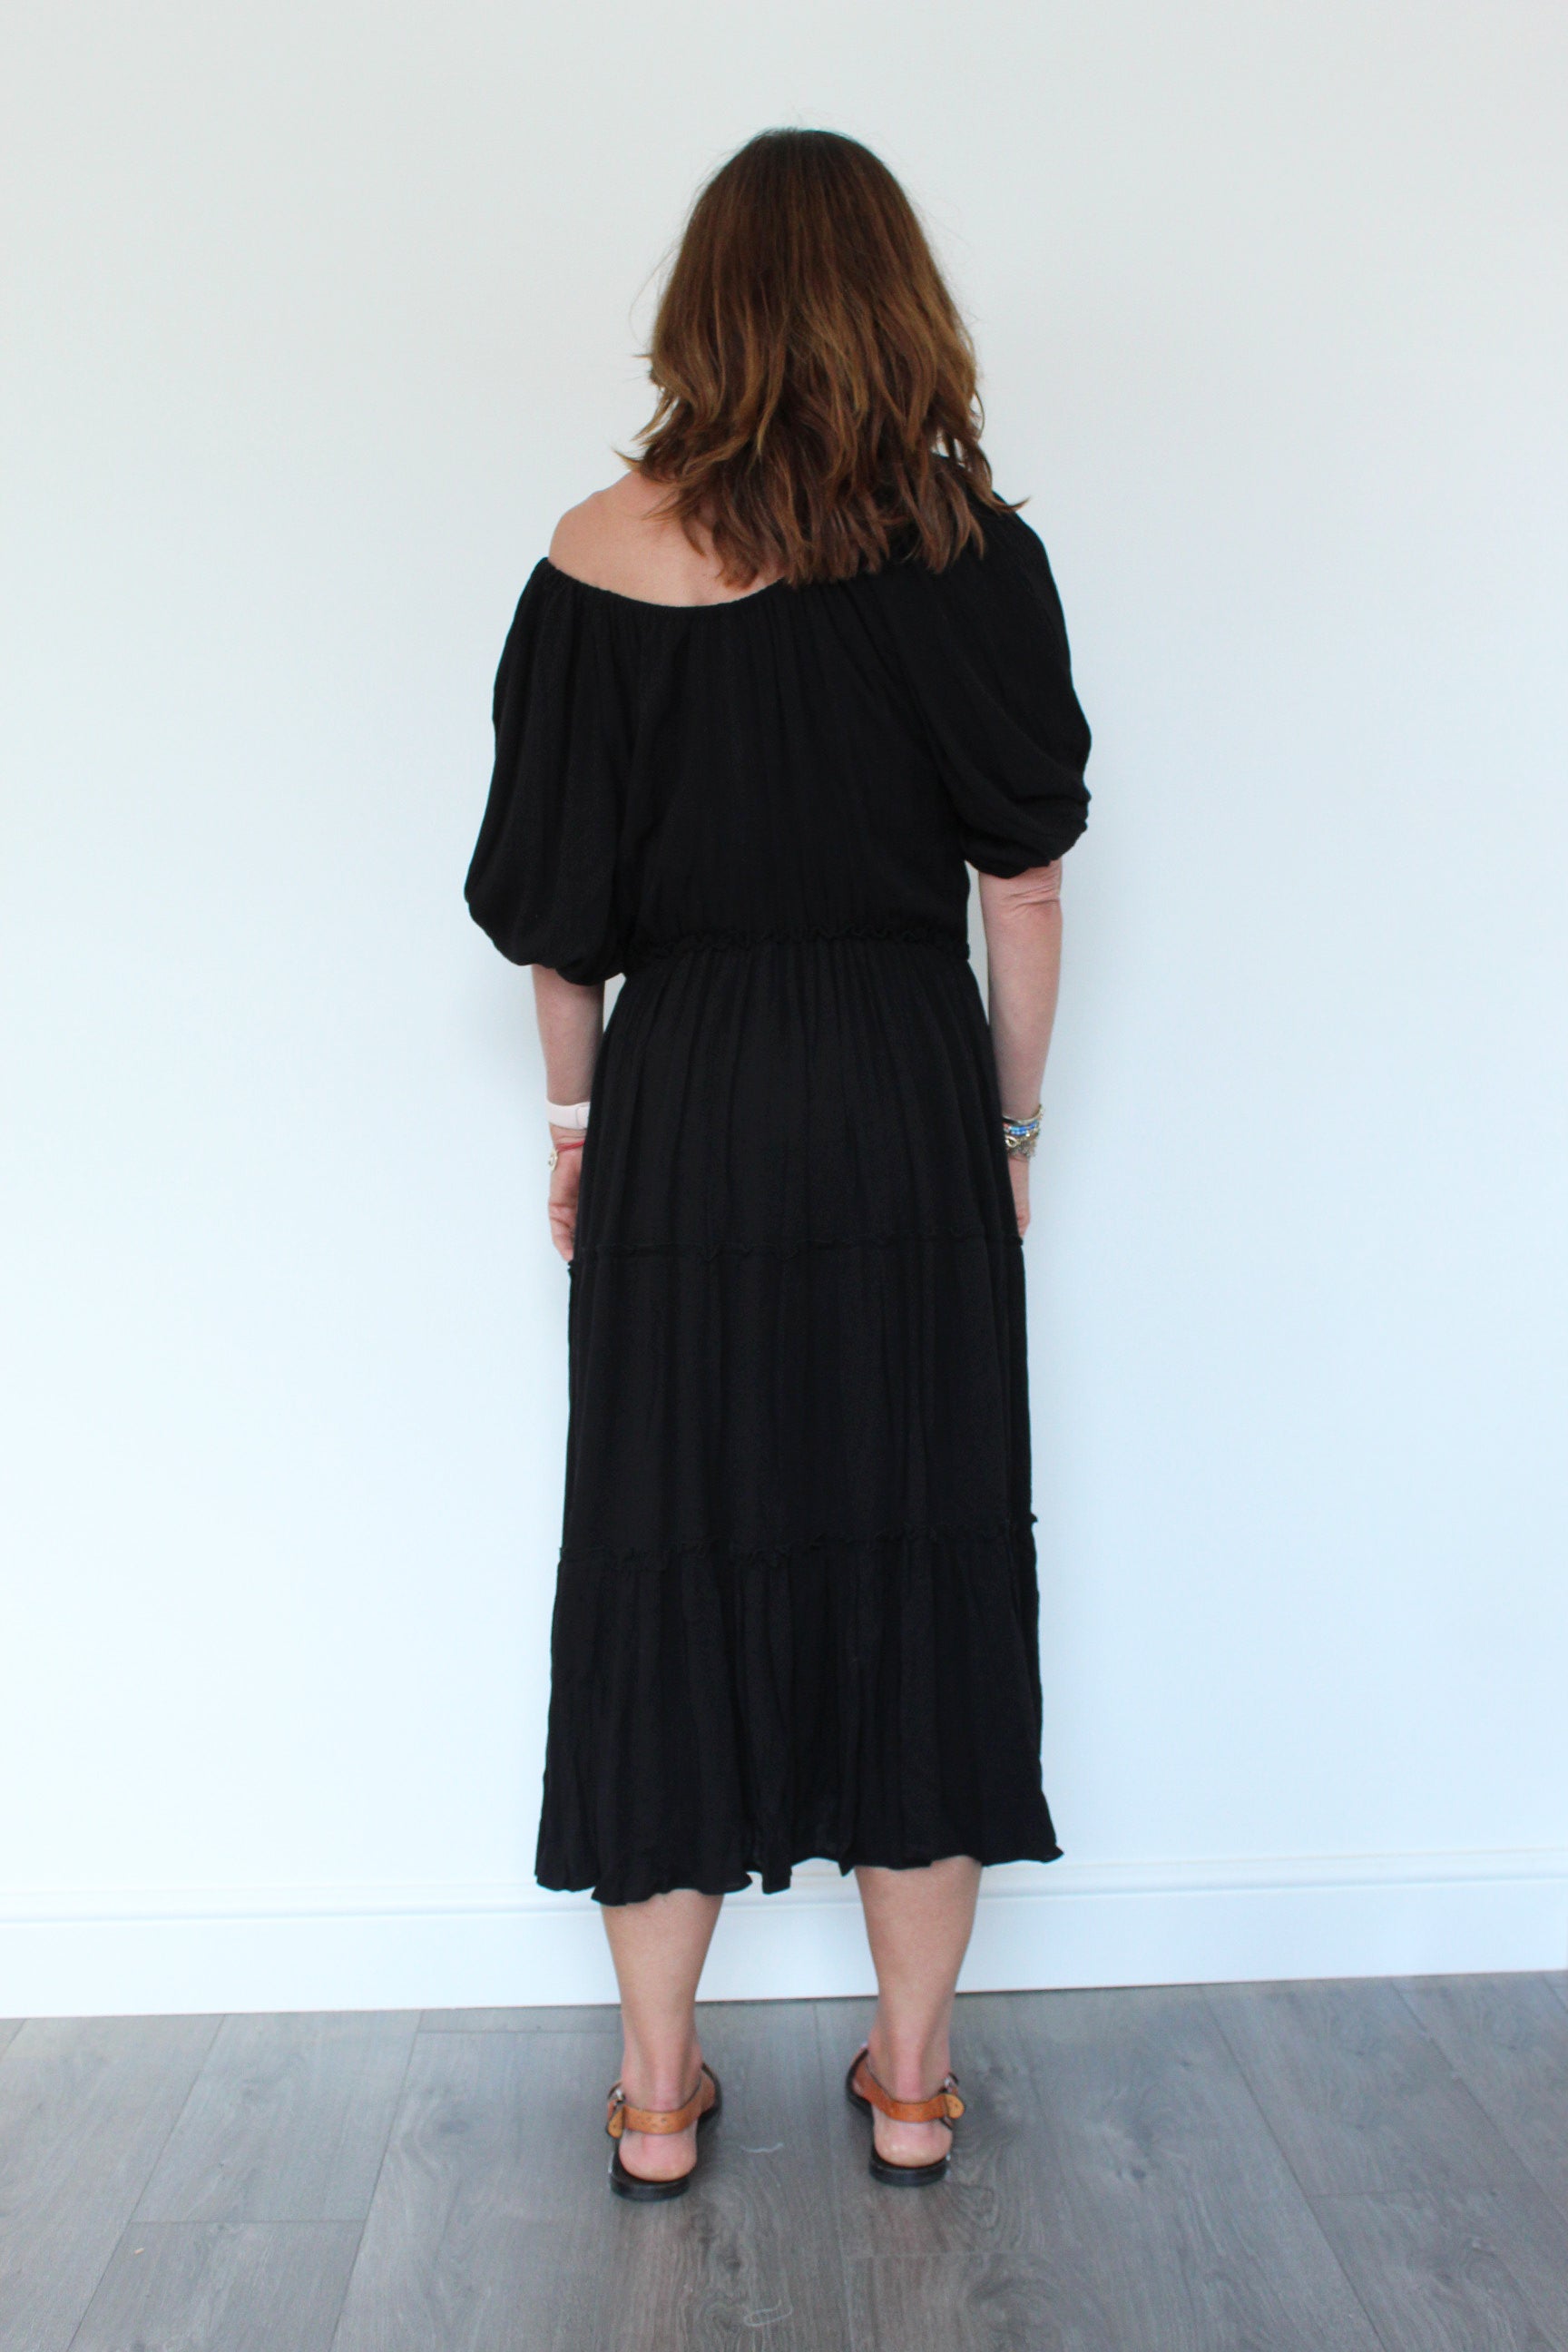 SLF Minora Vienna Dress in Black